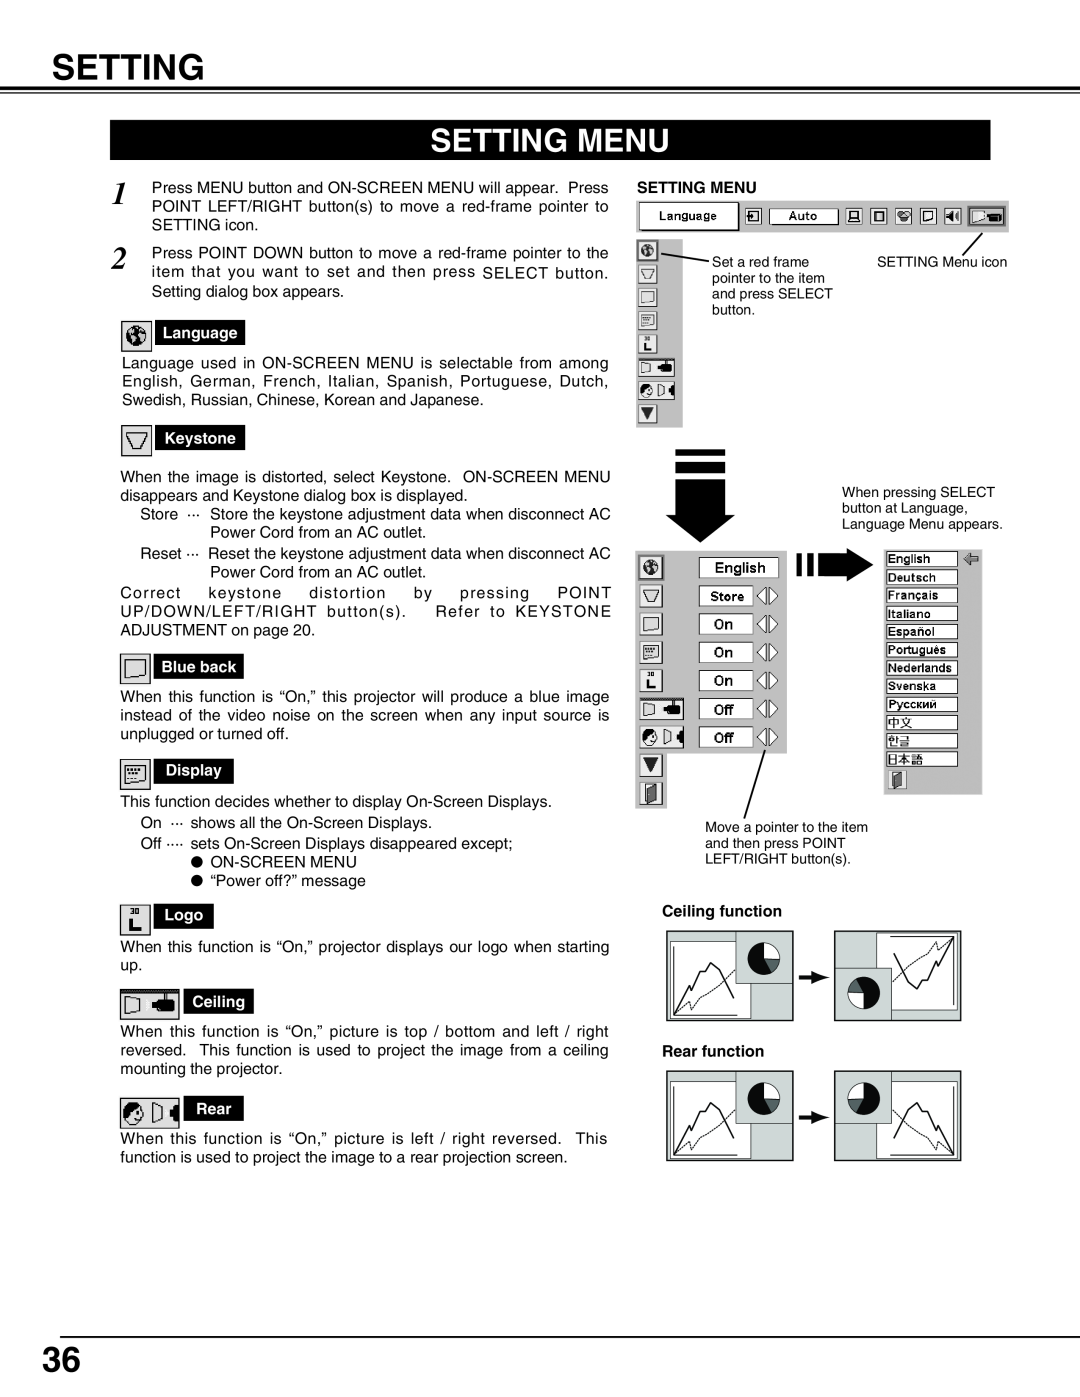 Sanyo PLC-XT11, PLC-XT16 owner manual Setting Menu, Ceiling function Rear function 